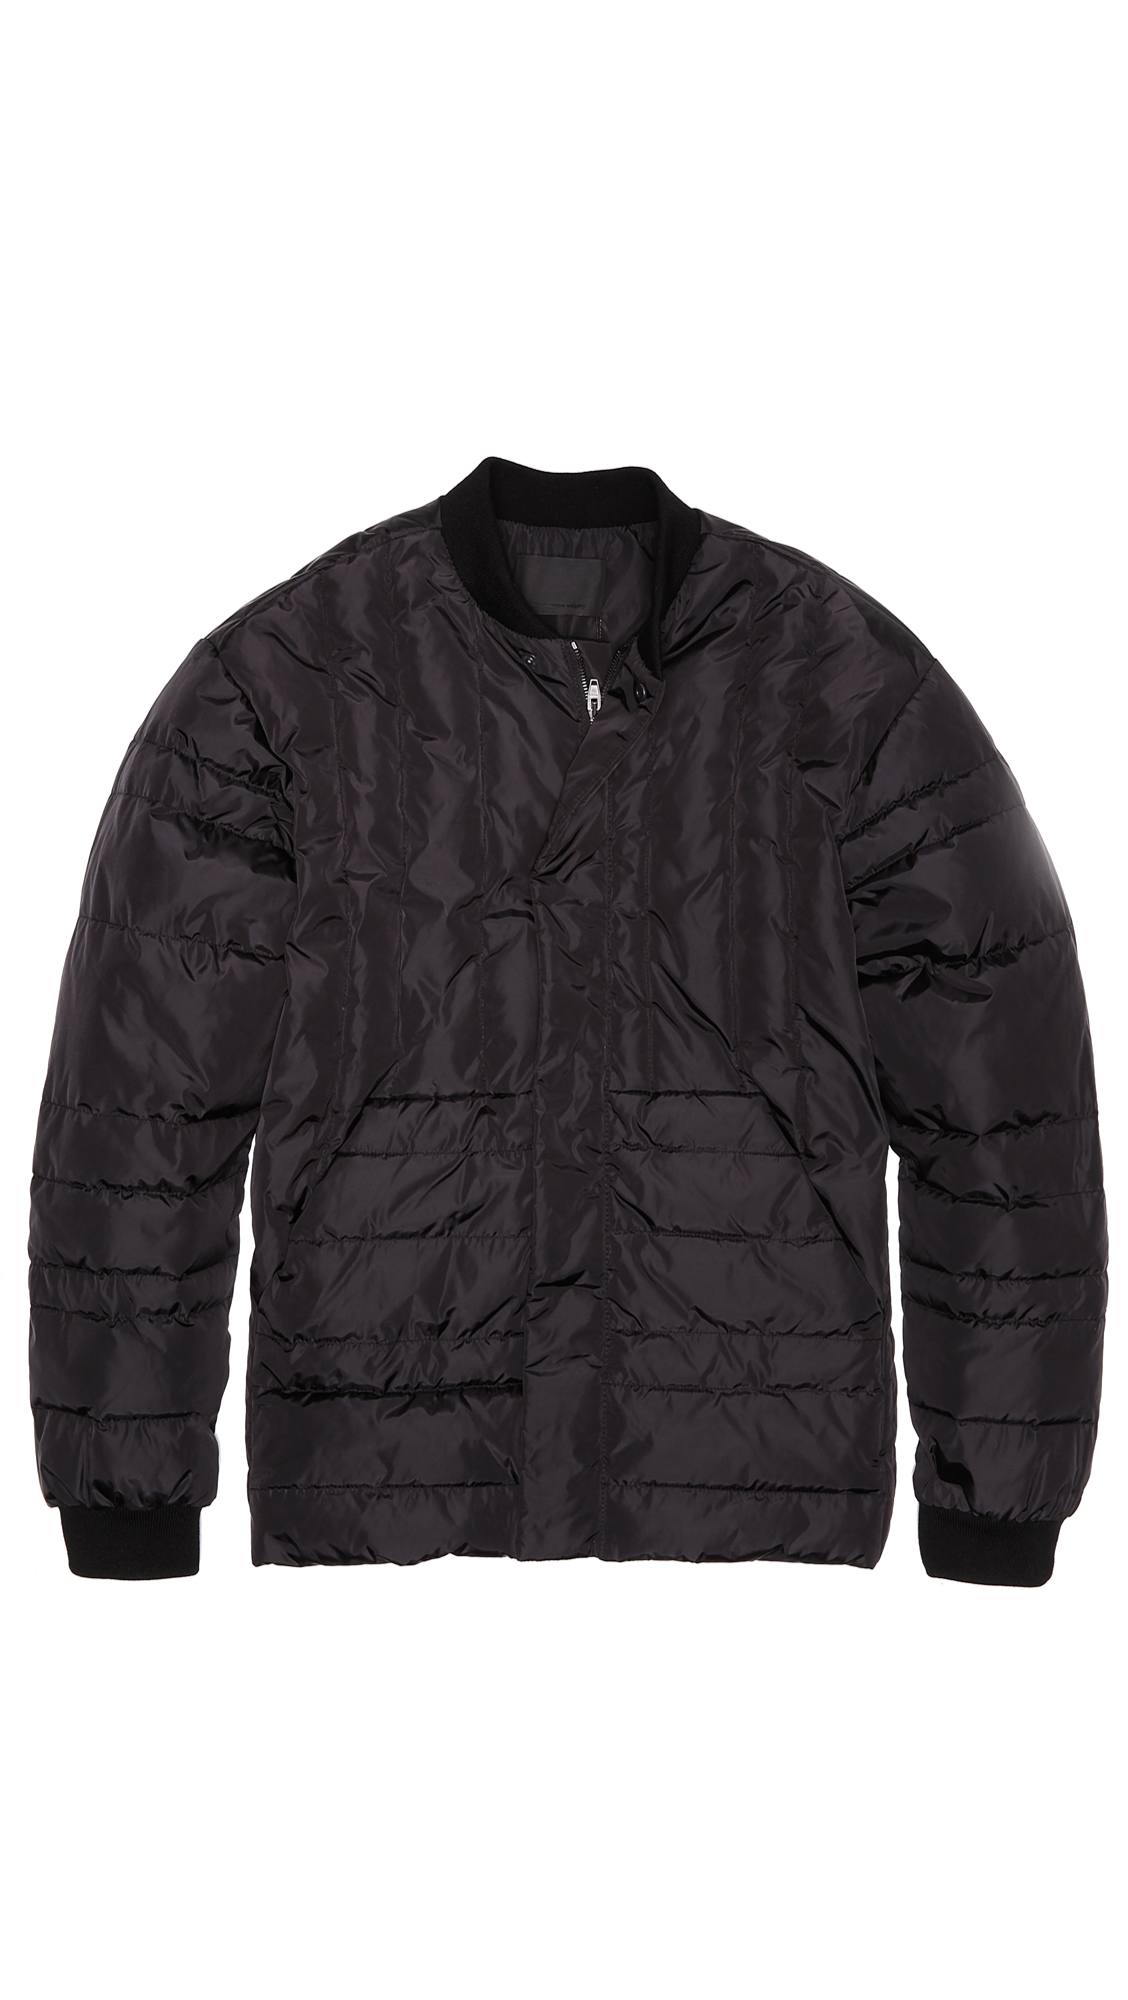 Lyst - Alexander wang Multi Seamed Puffer Jacket in Black for Men